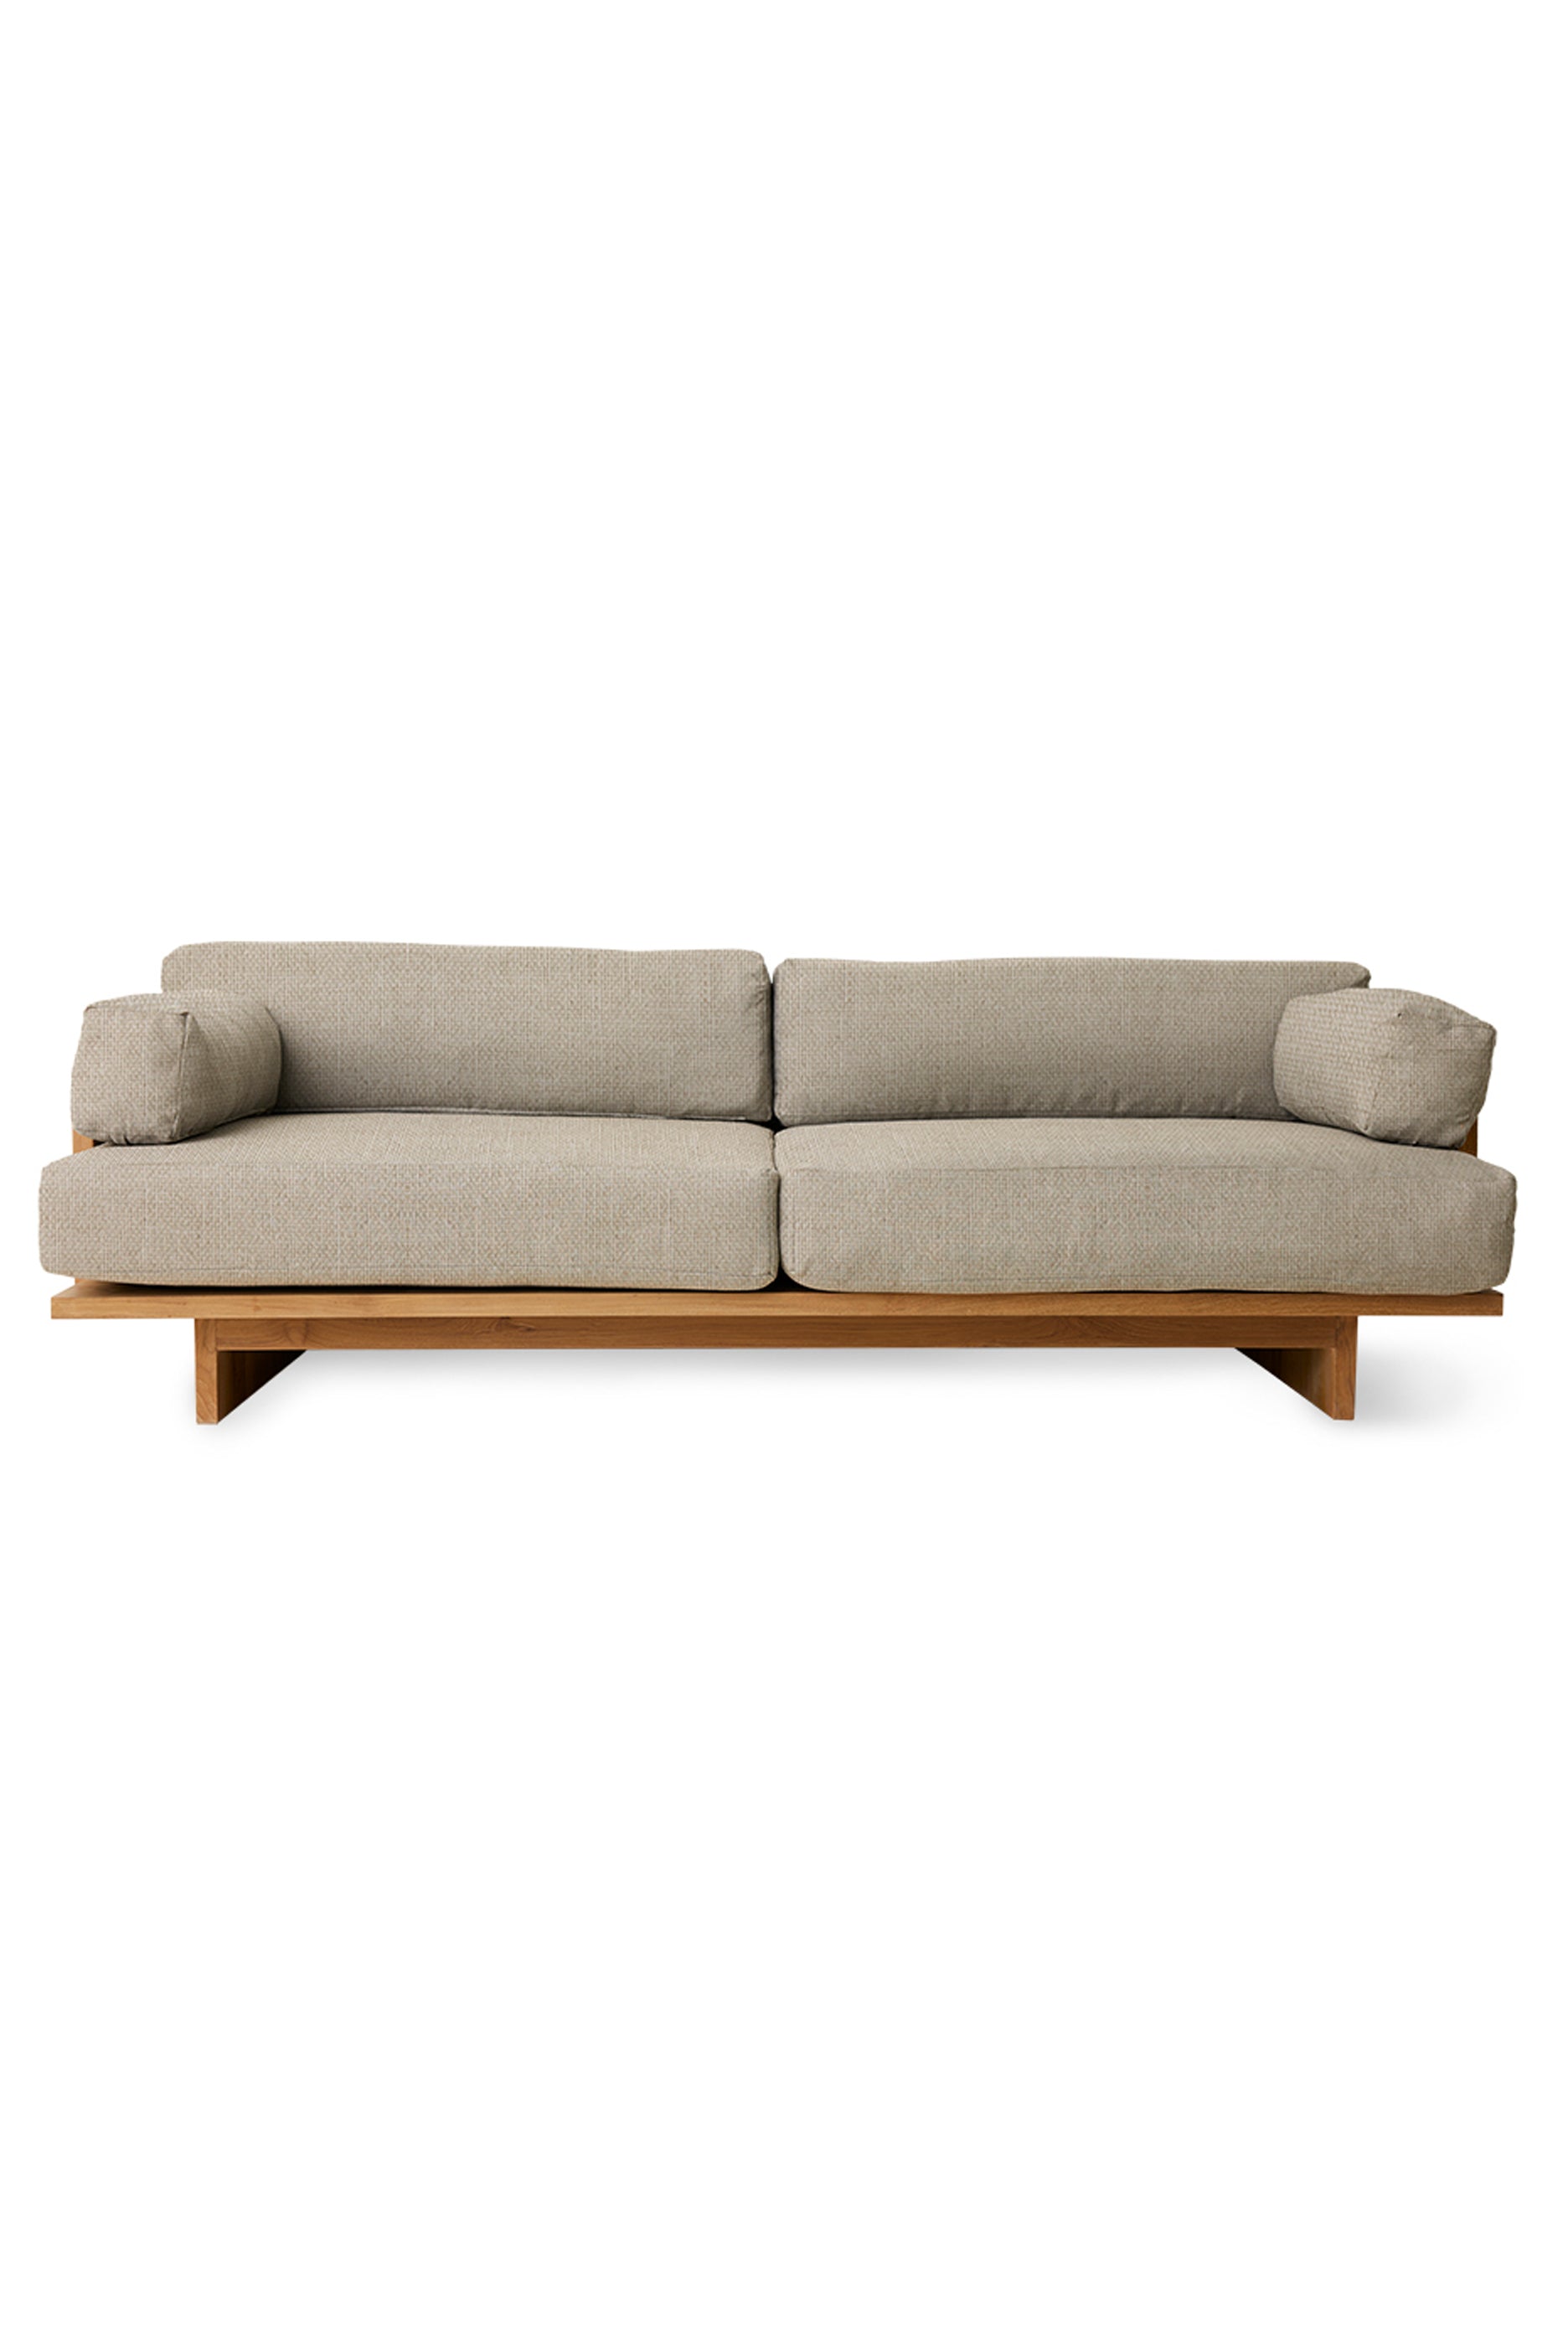 Premium Modern Wooden Sofa